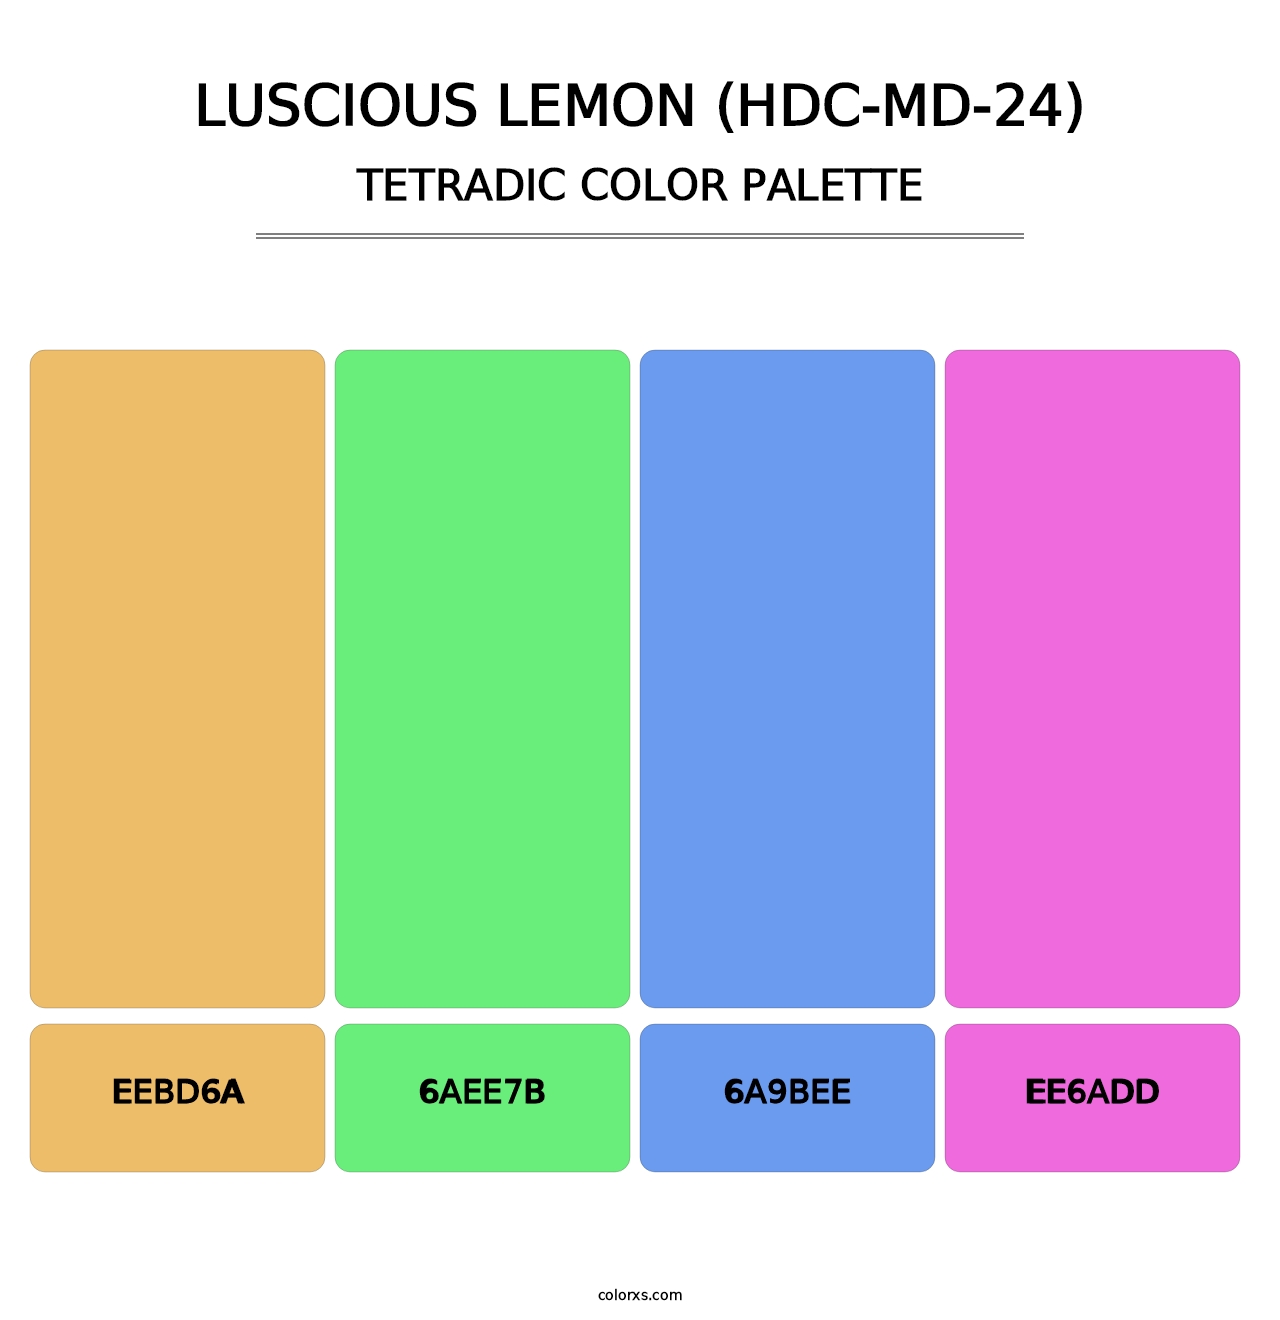 Luscious Lemon (HDC-MD-24) - Tetradic Color Palette